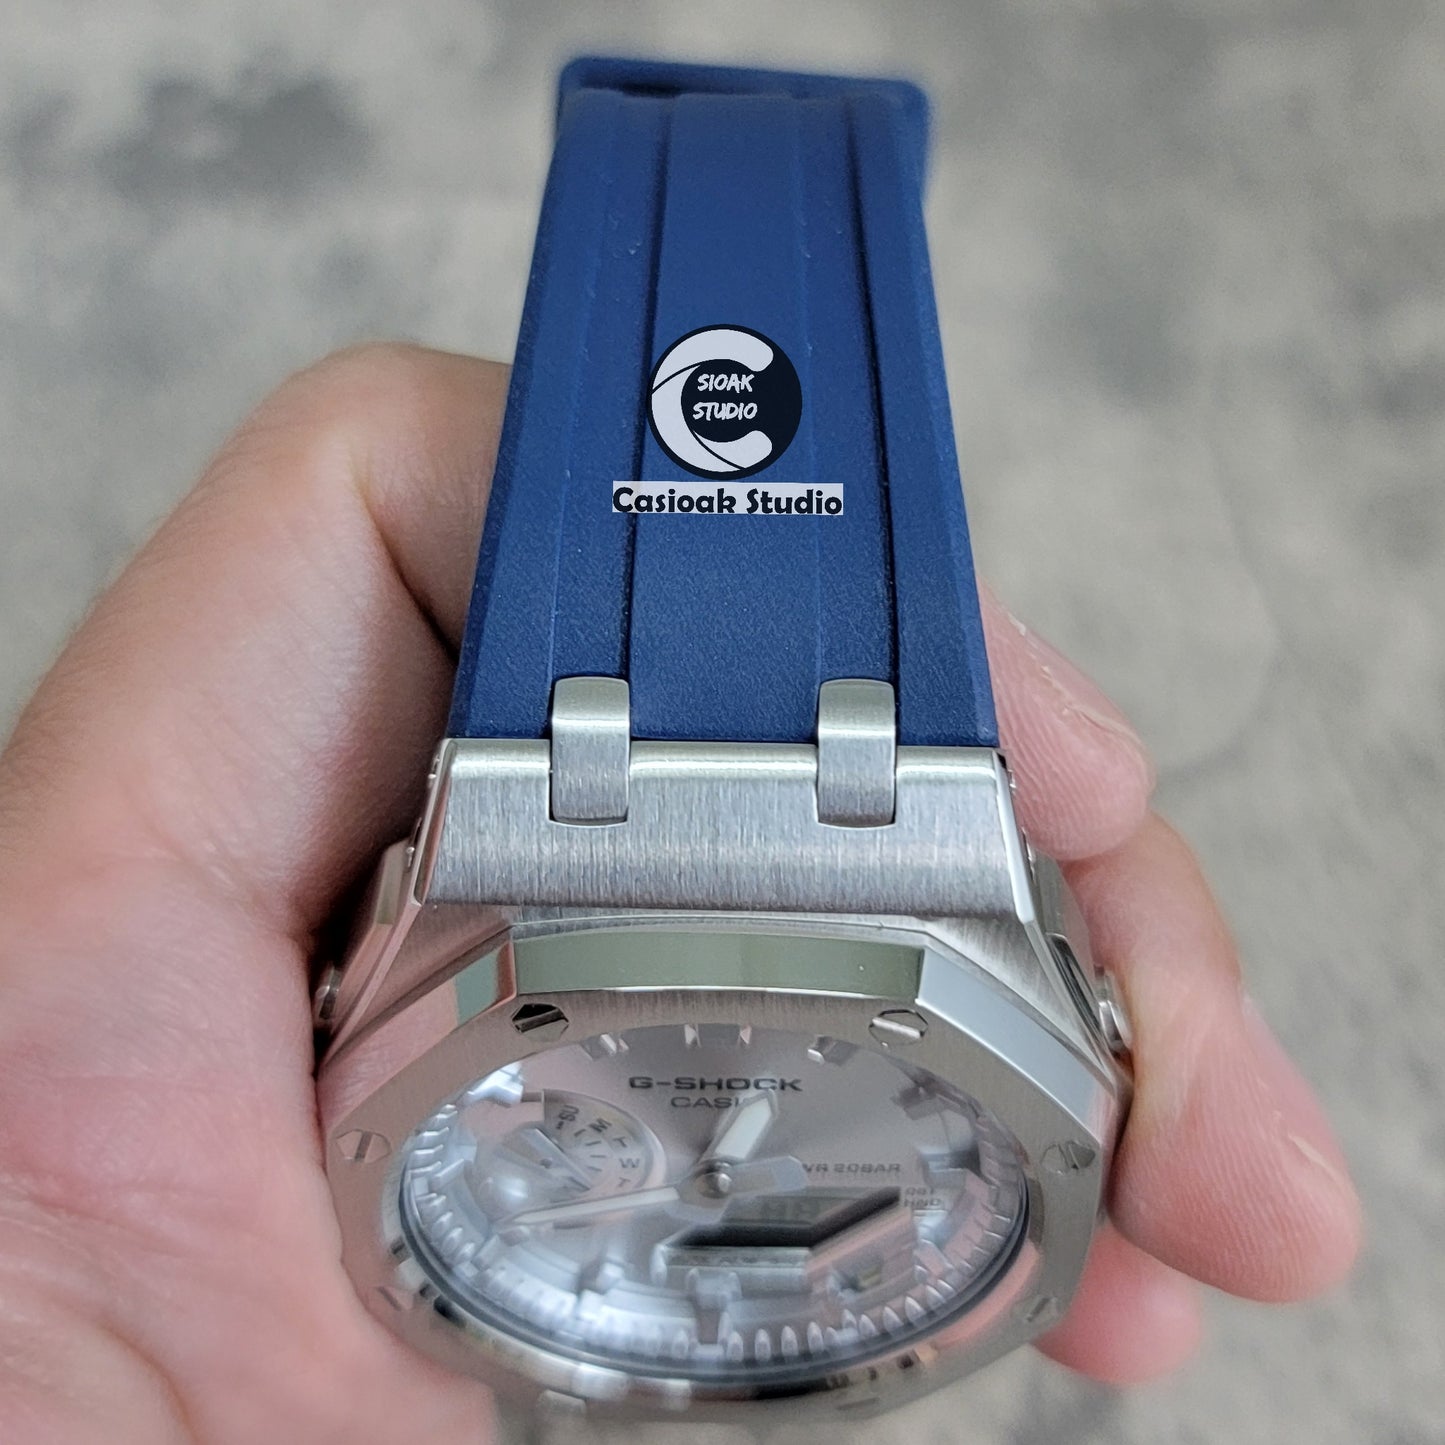 Casioak Mod Watch Offshore Superior Silver Case Blue Rubber Rubber Strap Silver Time Mark Silver Dial 44mm - Casioak Studio